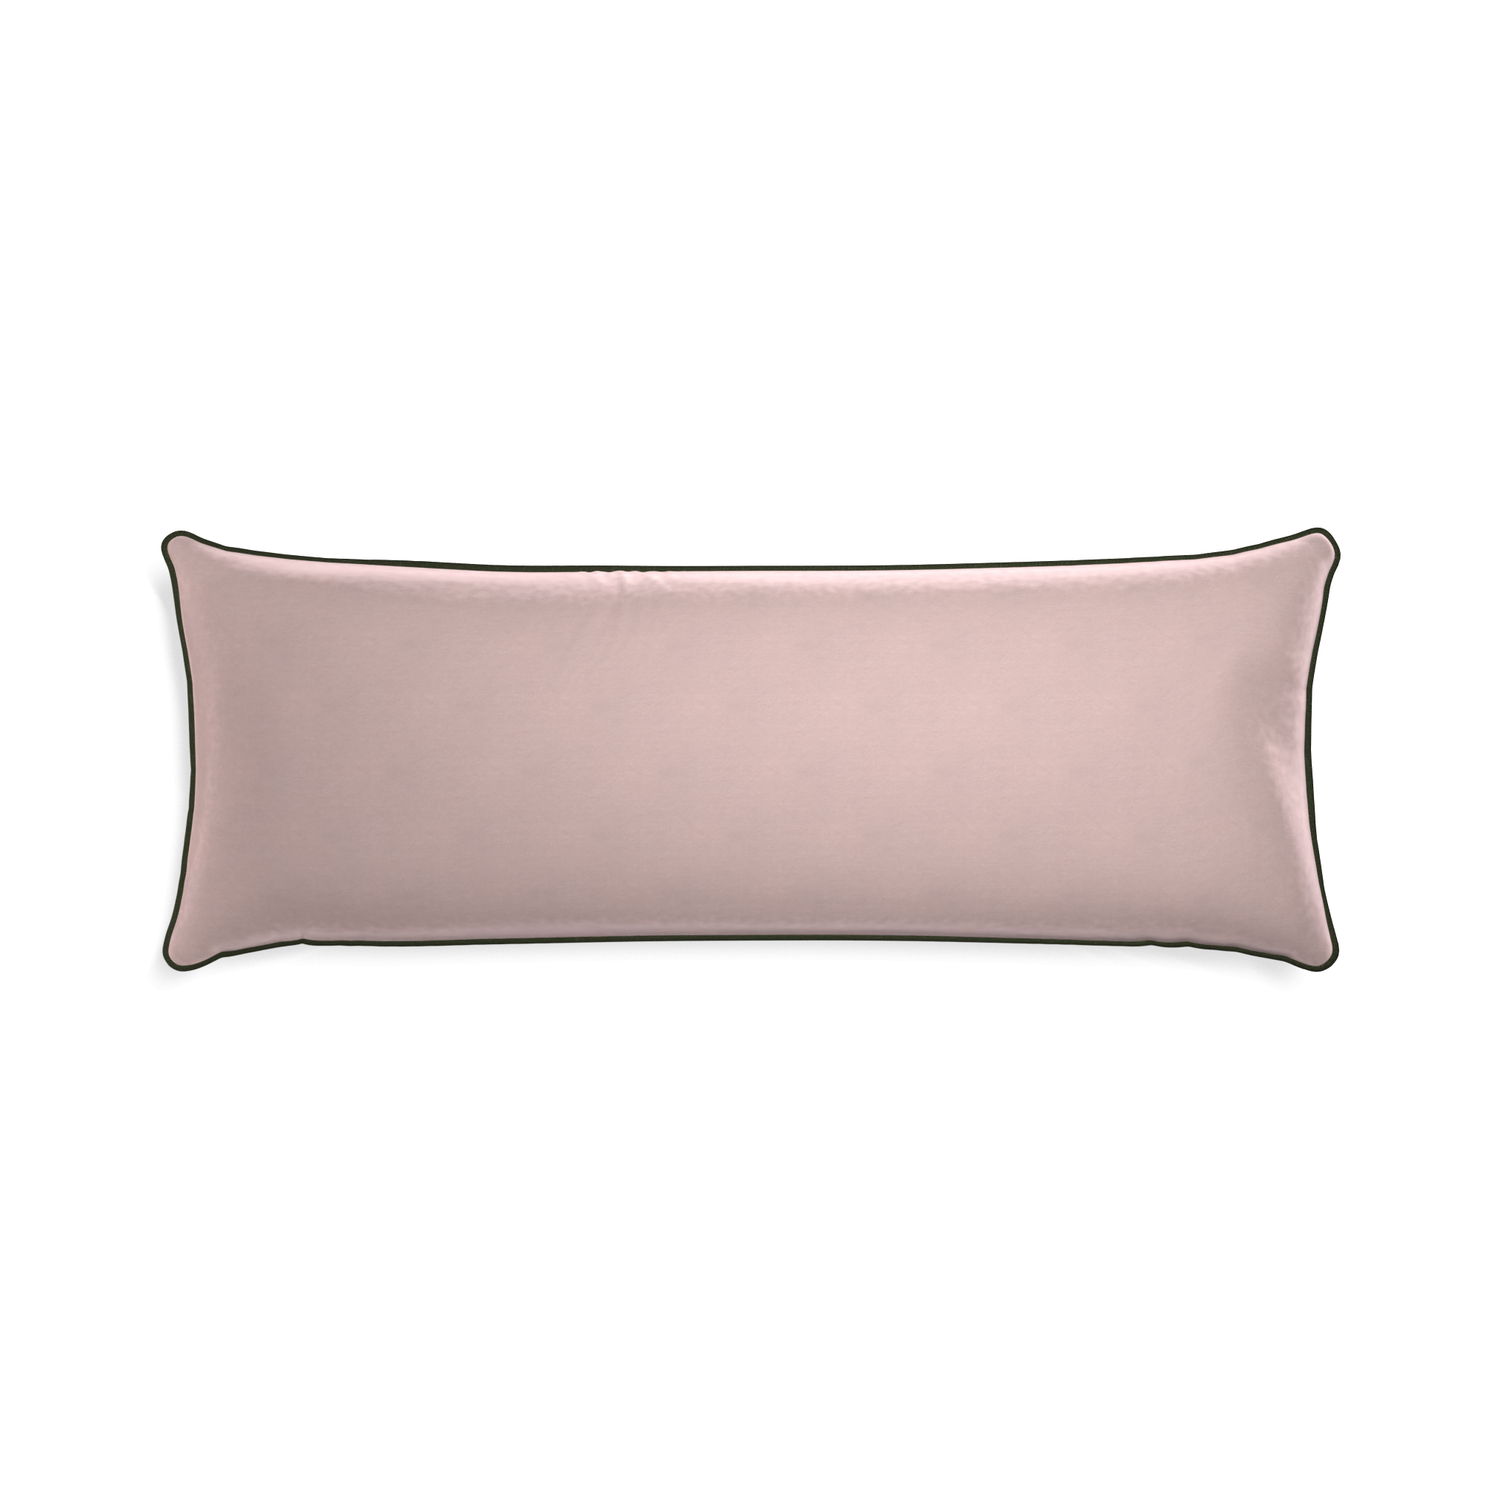 rectangle light pink velvet pillow with fern green piping